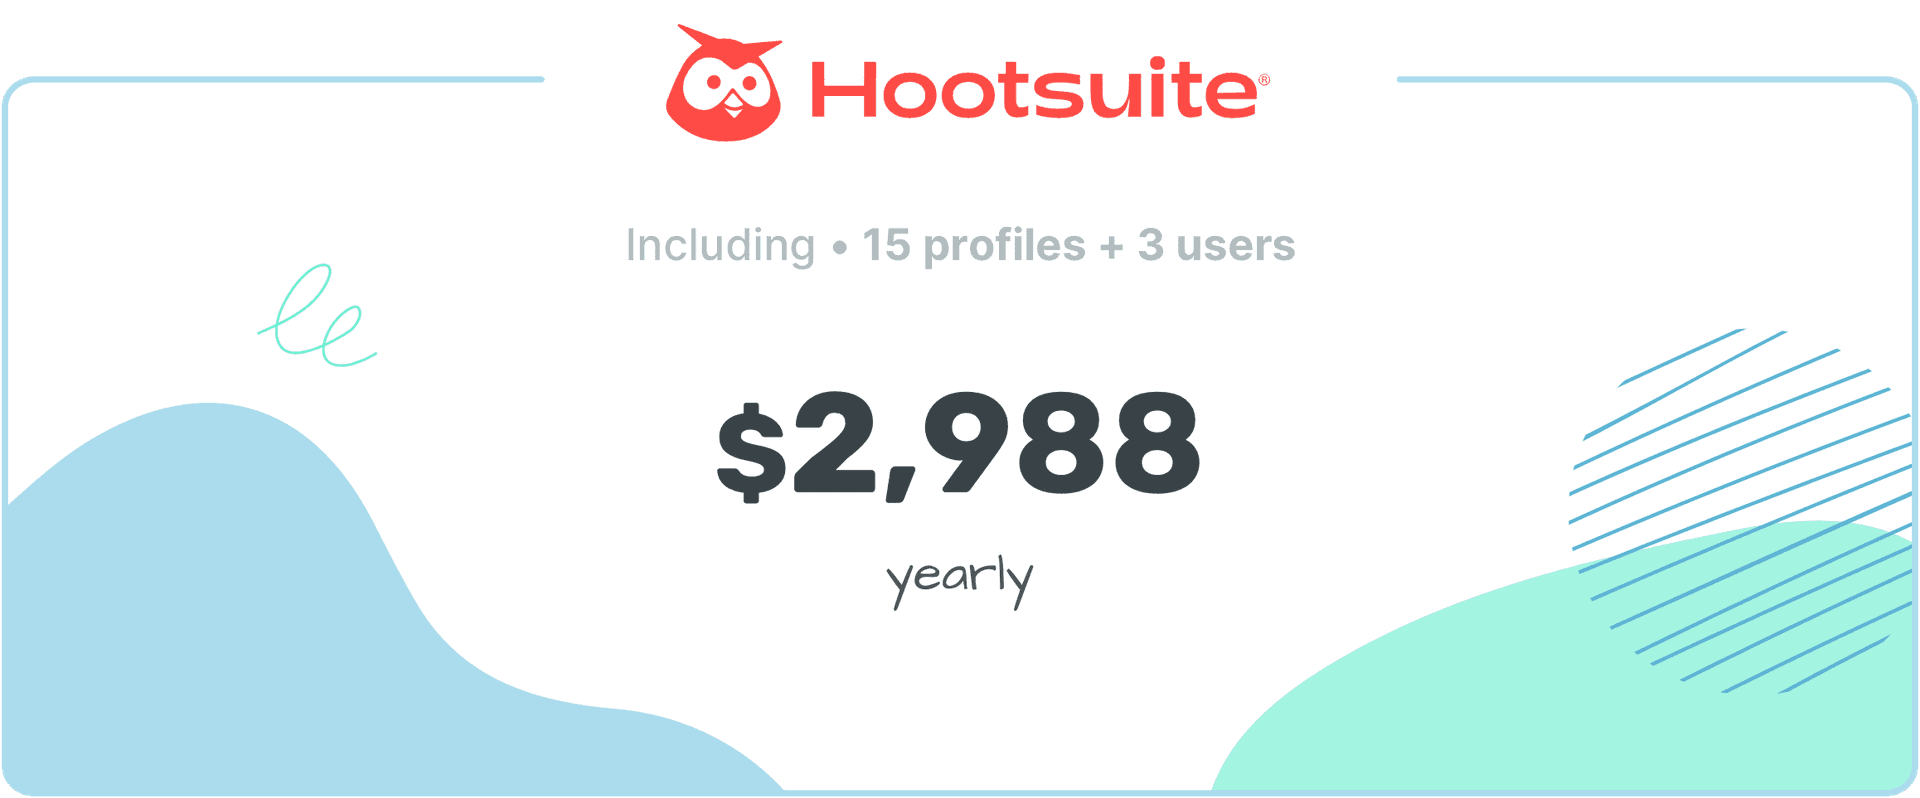 Social media management tools - Hootsuite pricing